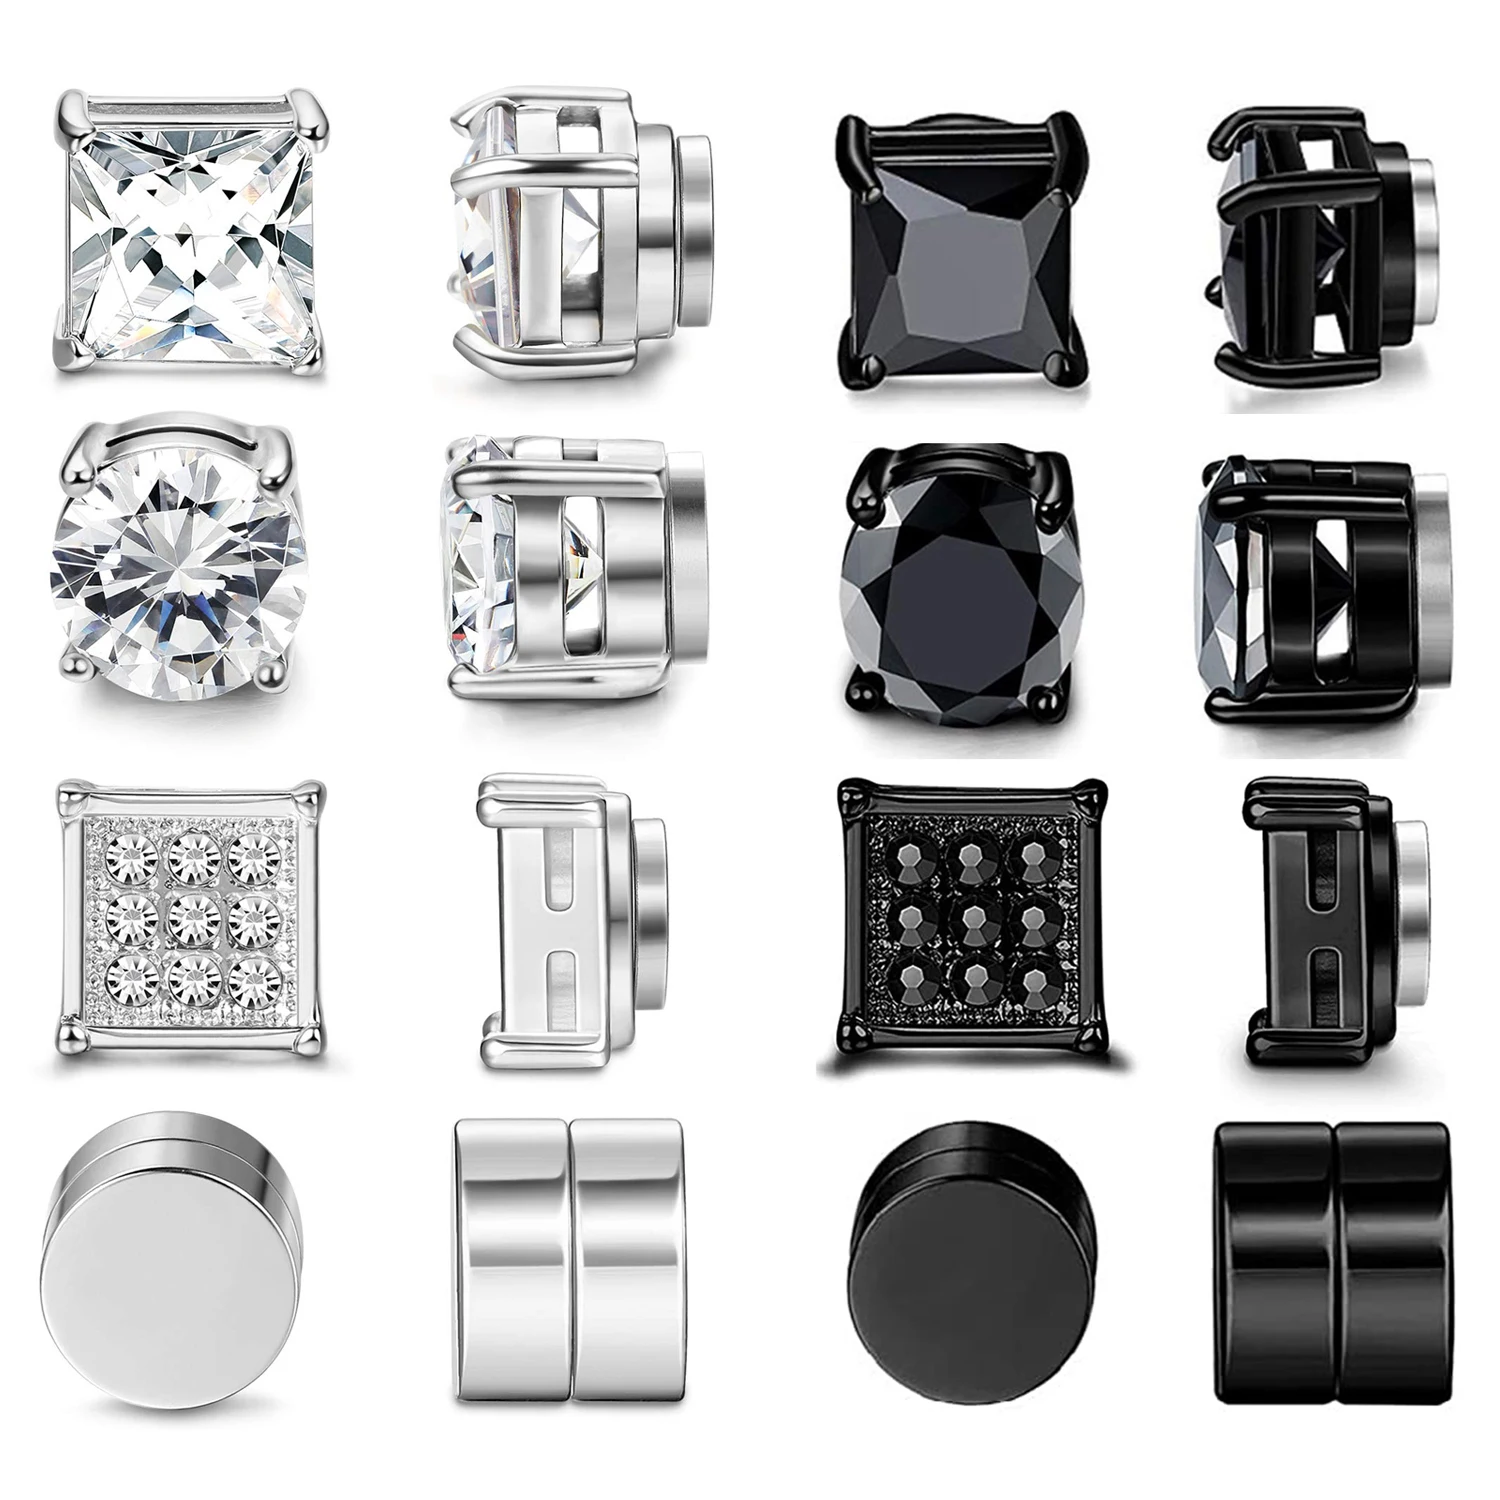 FIBO STEEL 3-4 Pairs Stainless Steel Magnetic Earrings for Men Women CZ Studs Earrings,6-8MM 